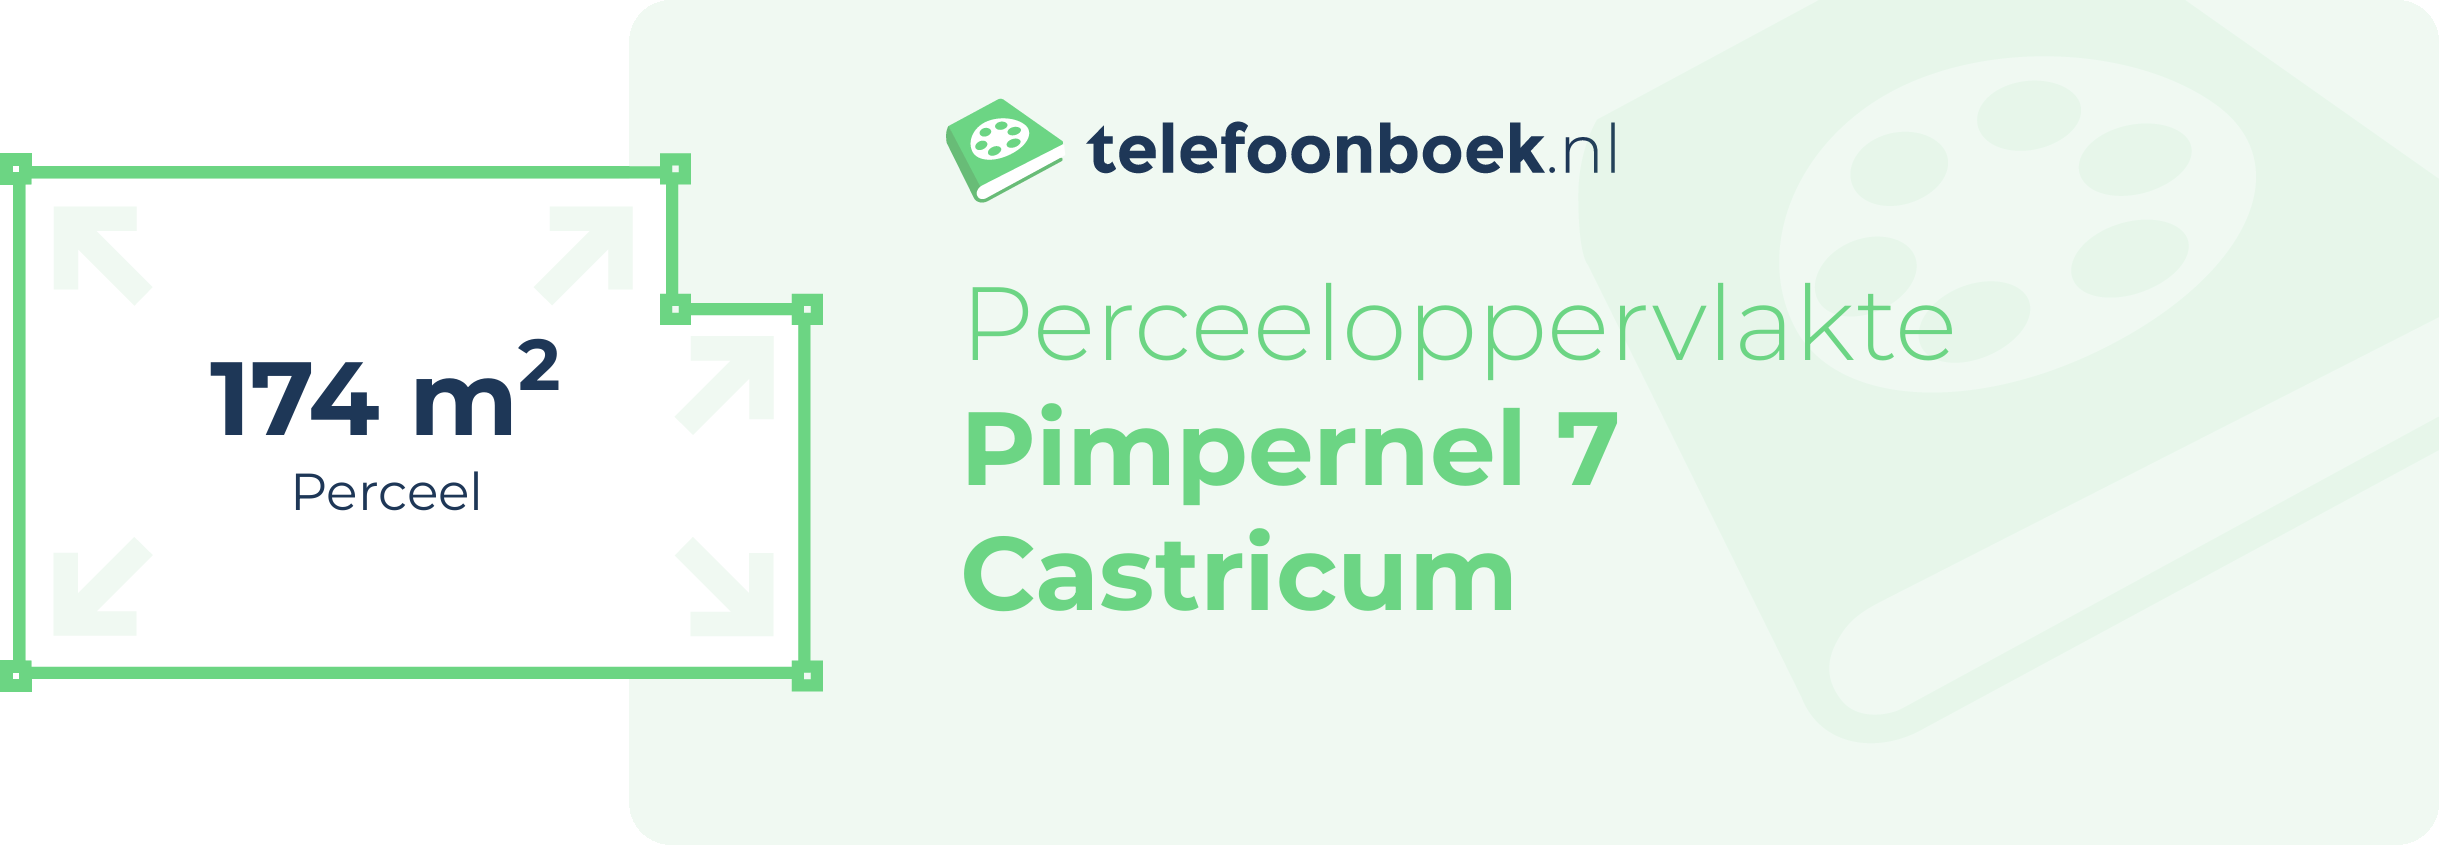 Perceeloppervlakte Pimpernel 7 Castricum